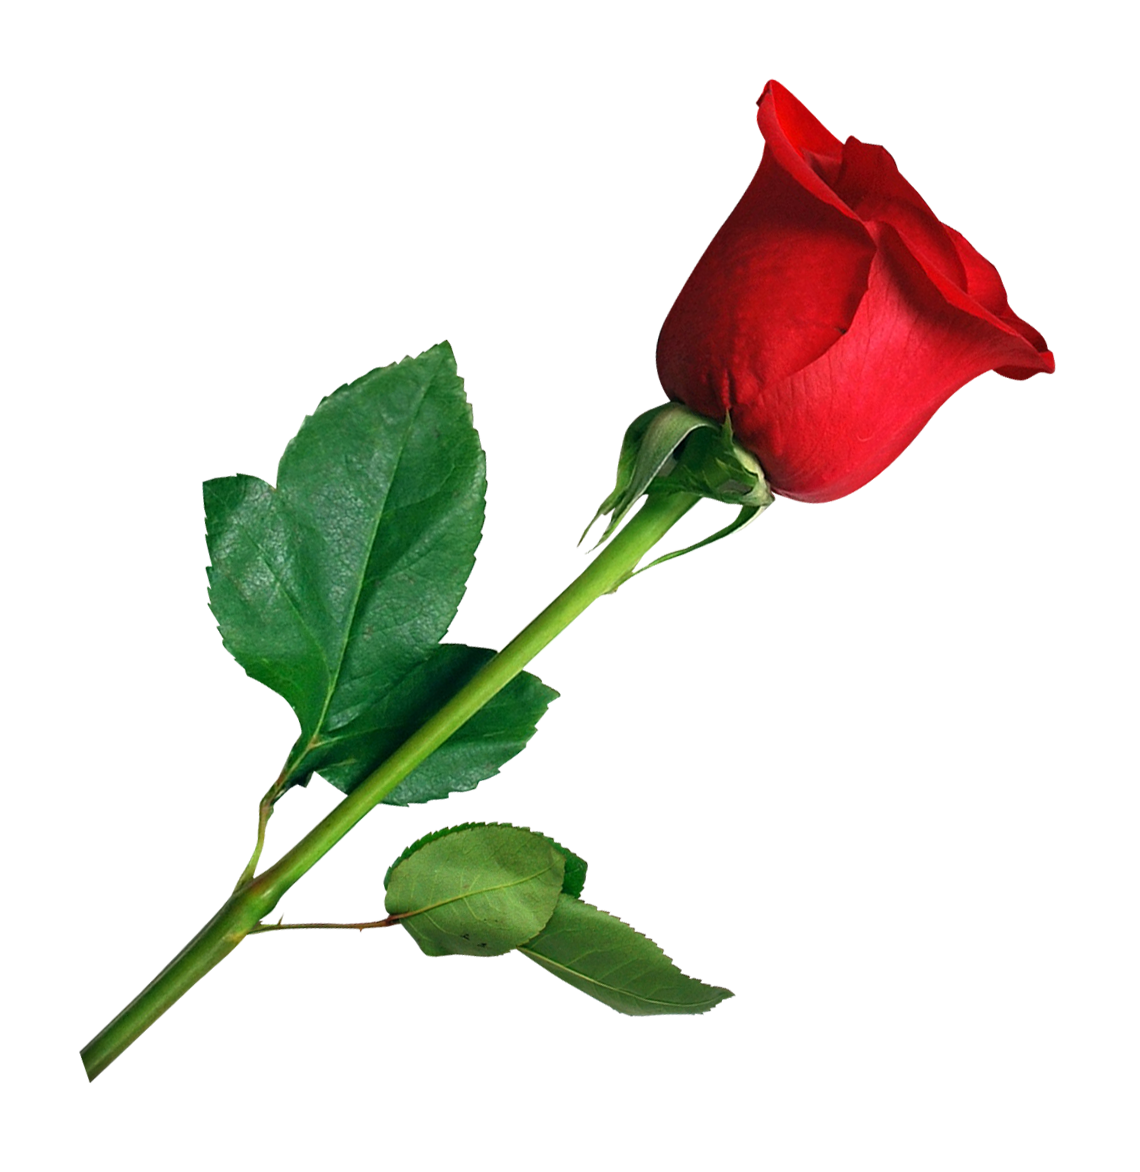 Single Red Rose PNG HD - Rose